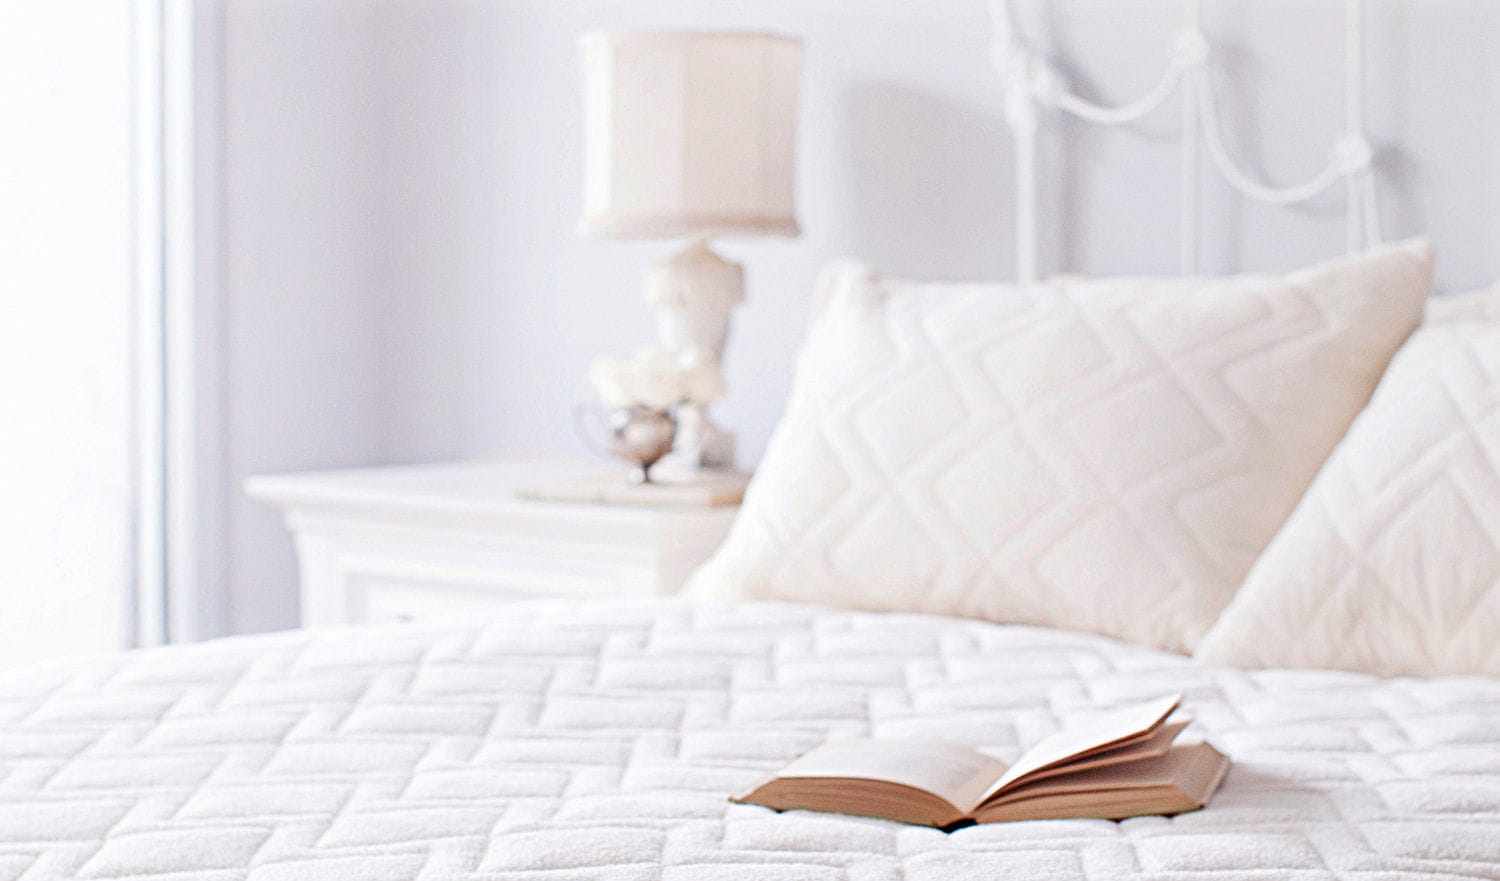 dormeir wool mattress pad